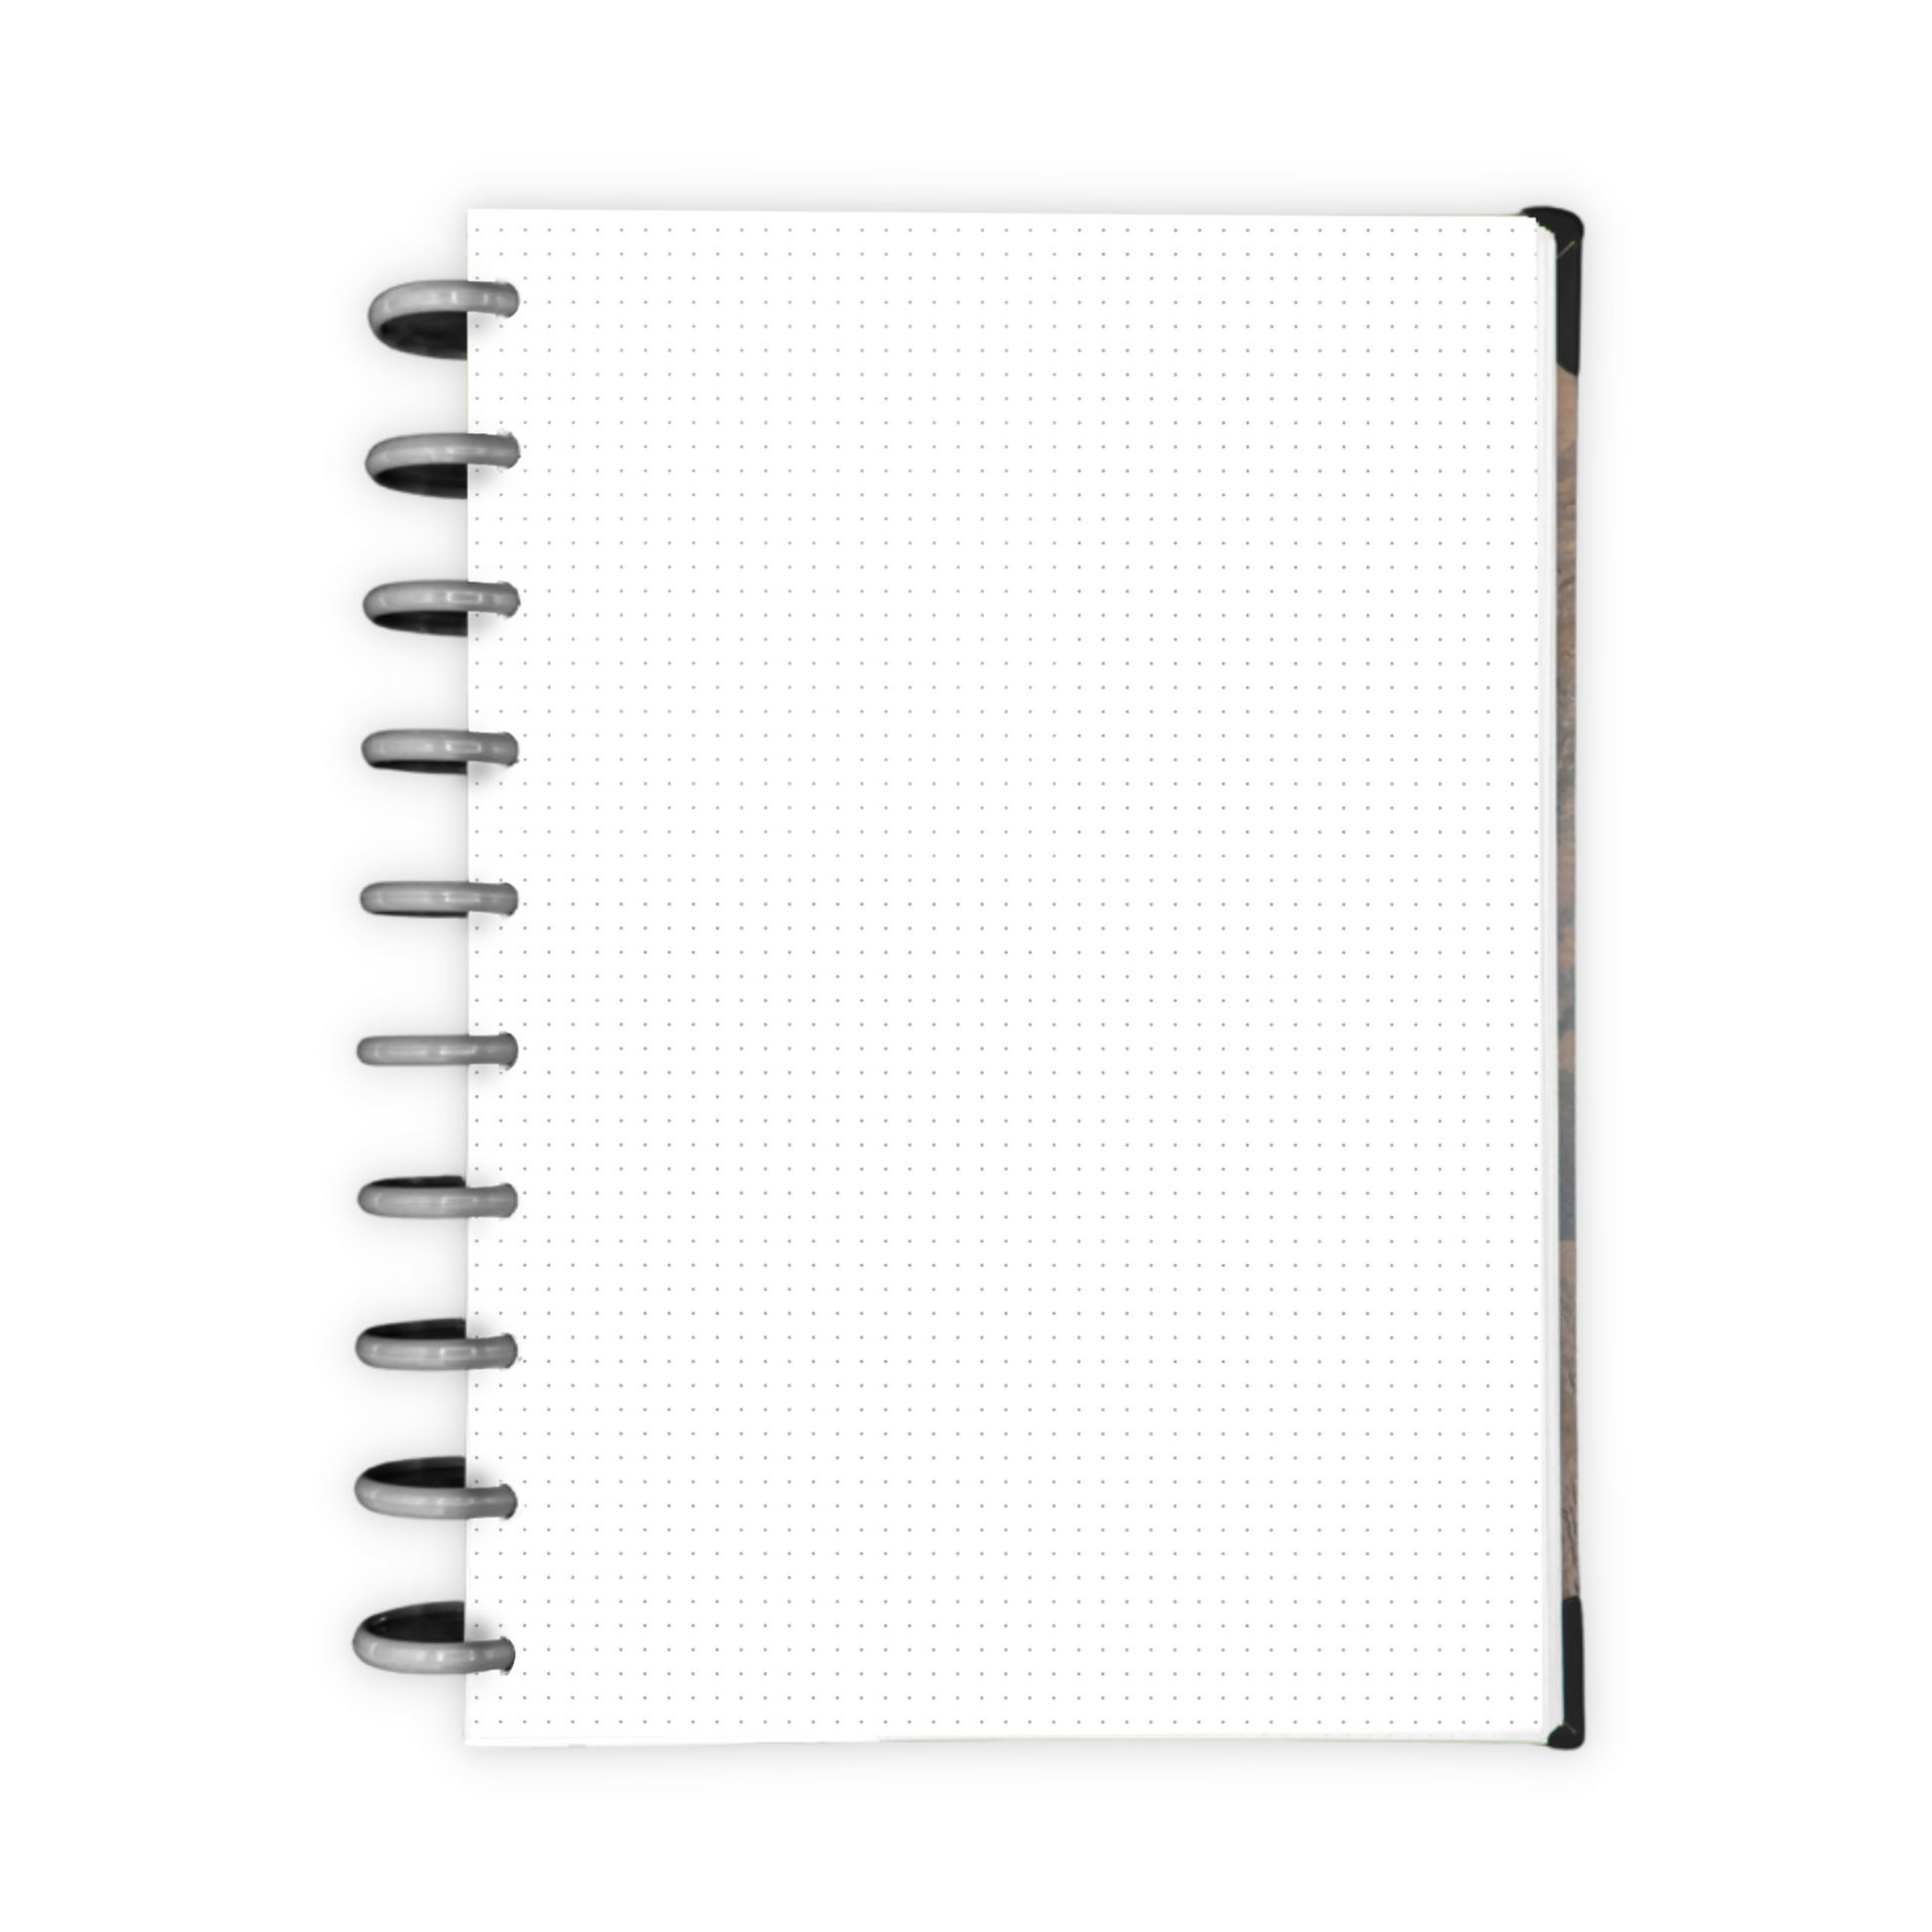 Blank dot grid paper in a planner